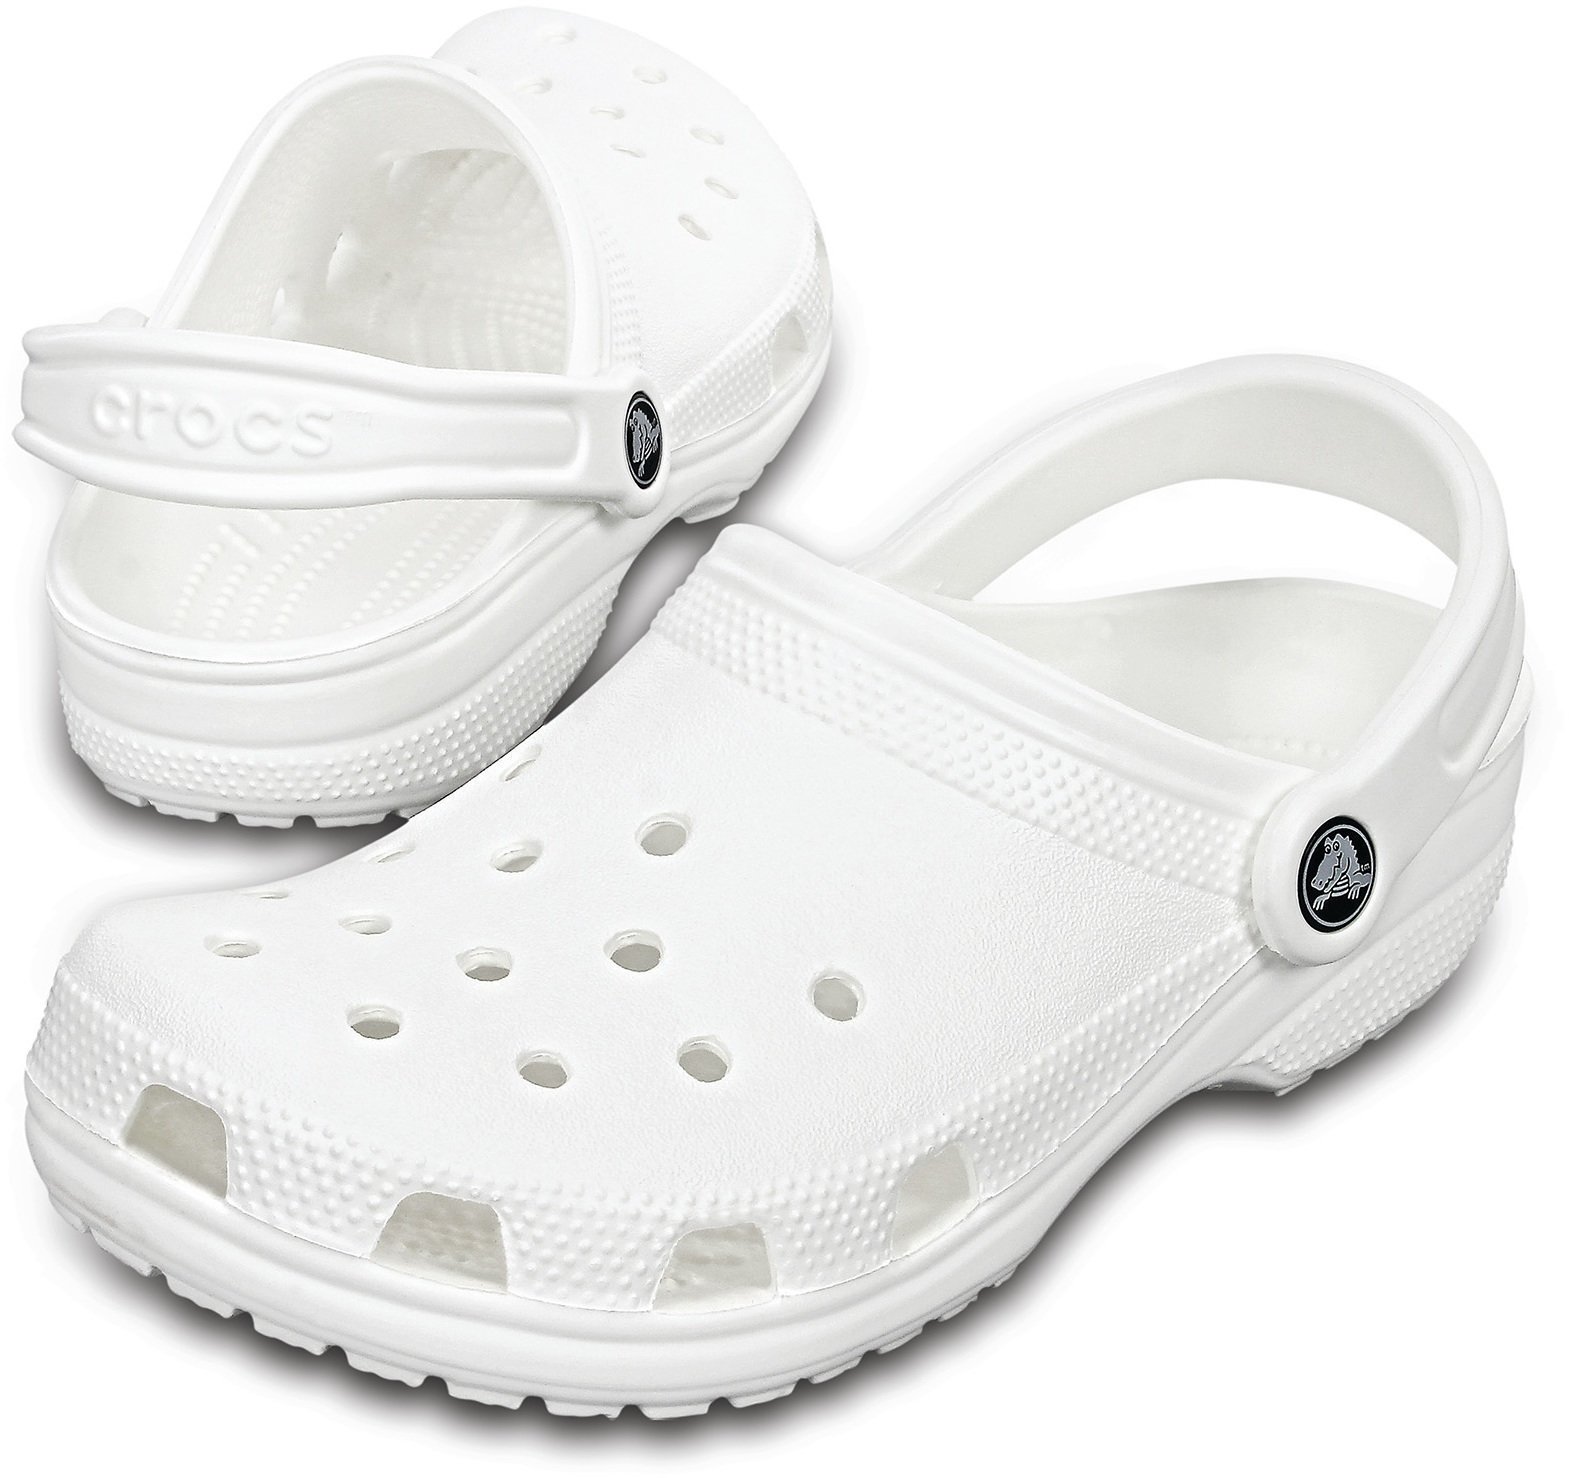 Unisex cipele za jedrenje Crocs Classic Clog White 46-47